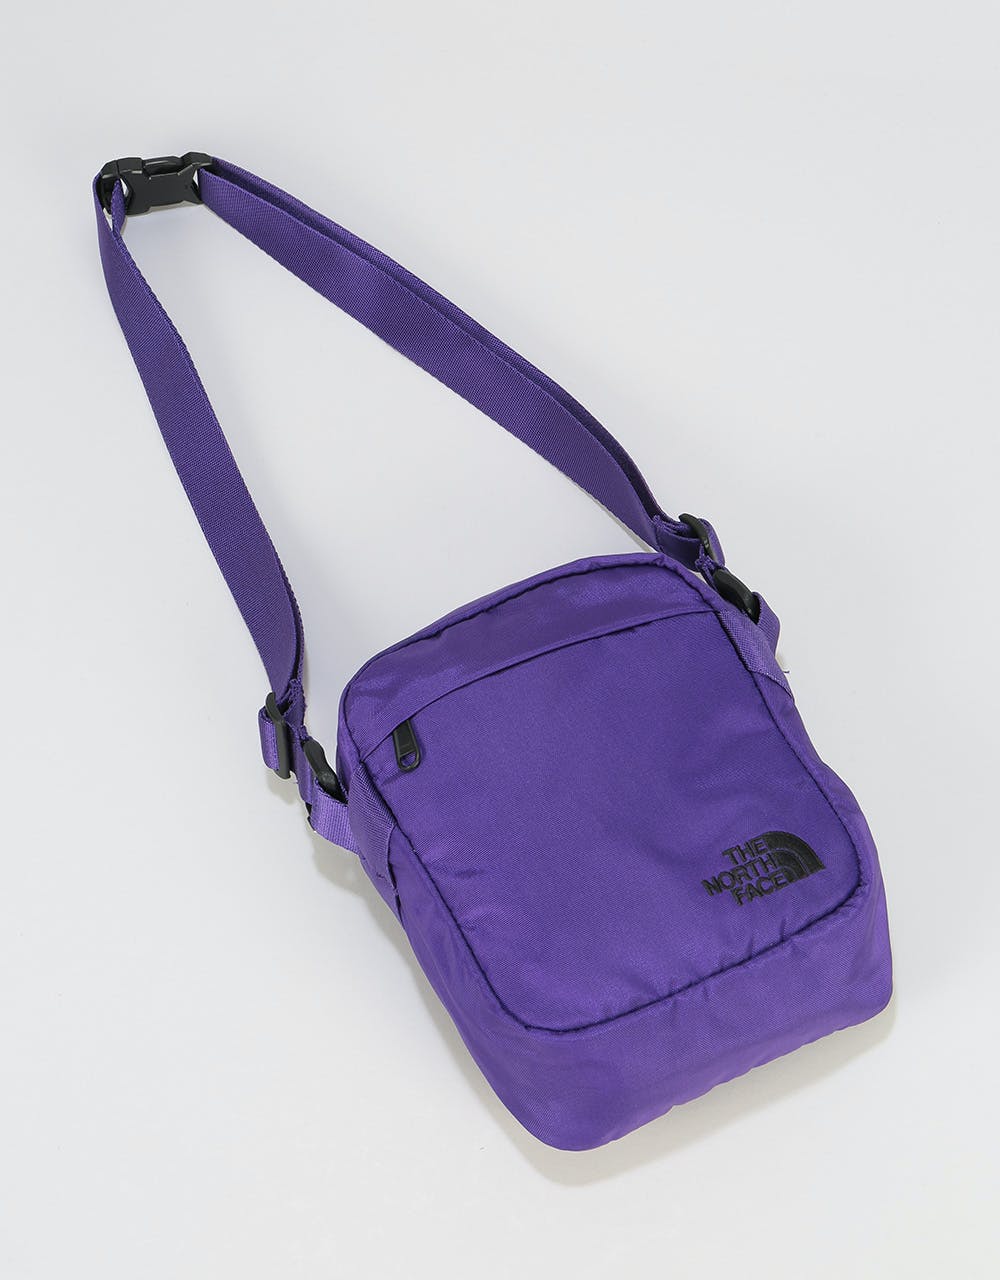 The North Face Convertible Cross Body Bag - Hero Purple/TNF Black